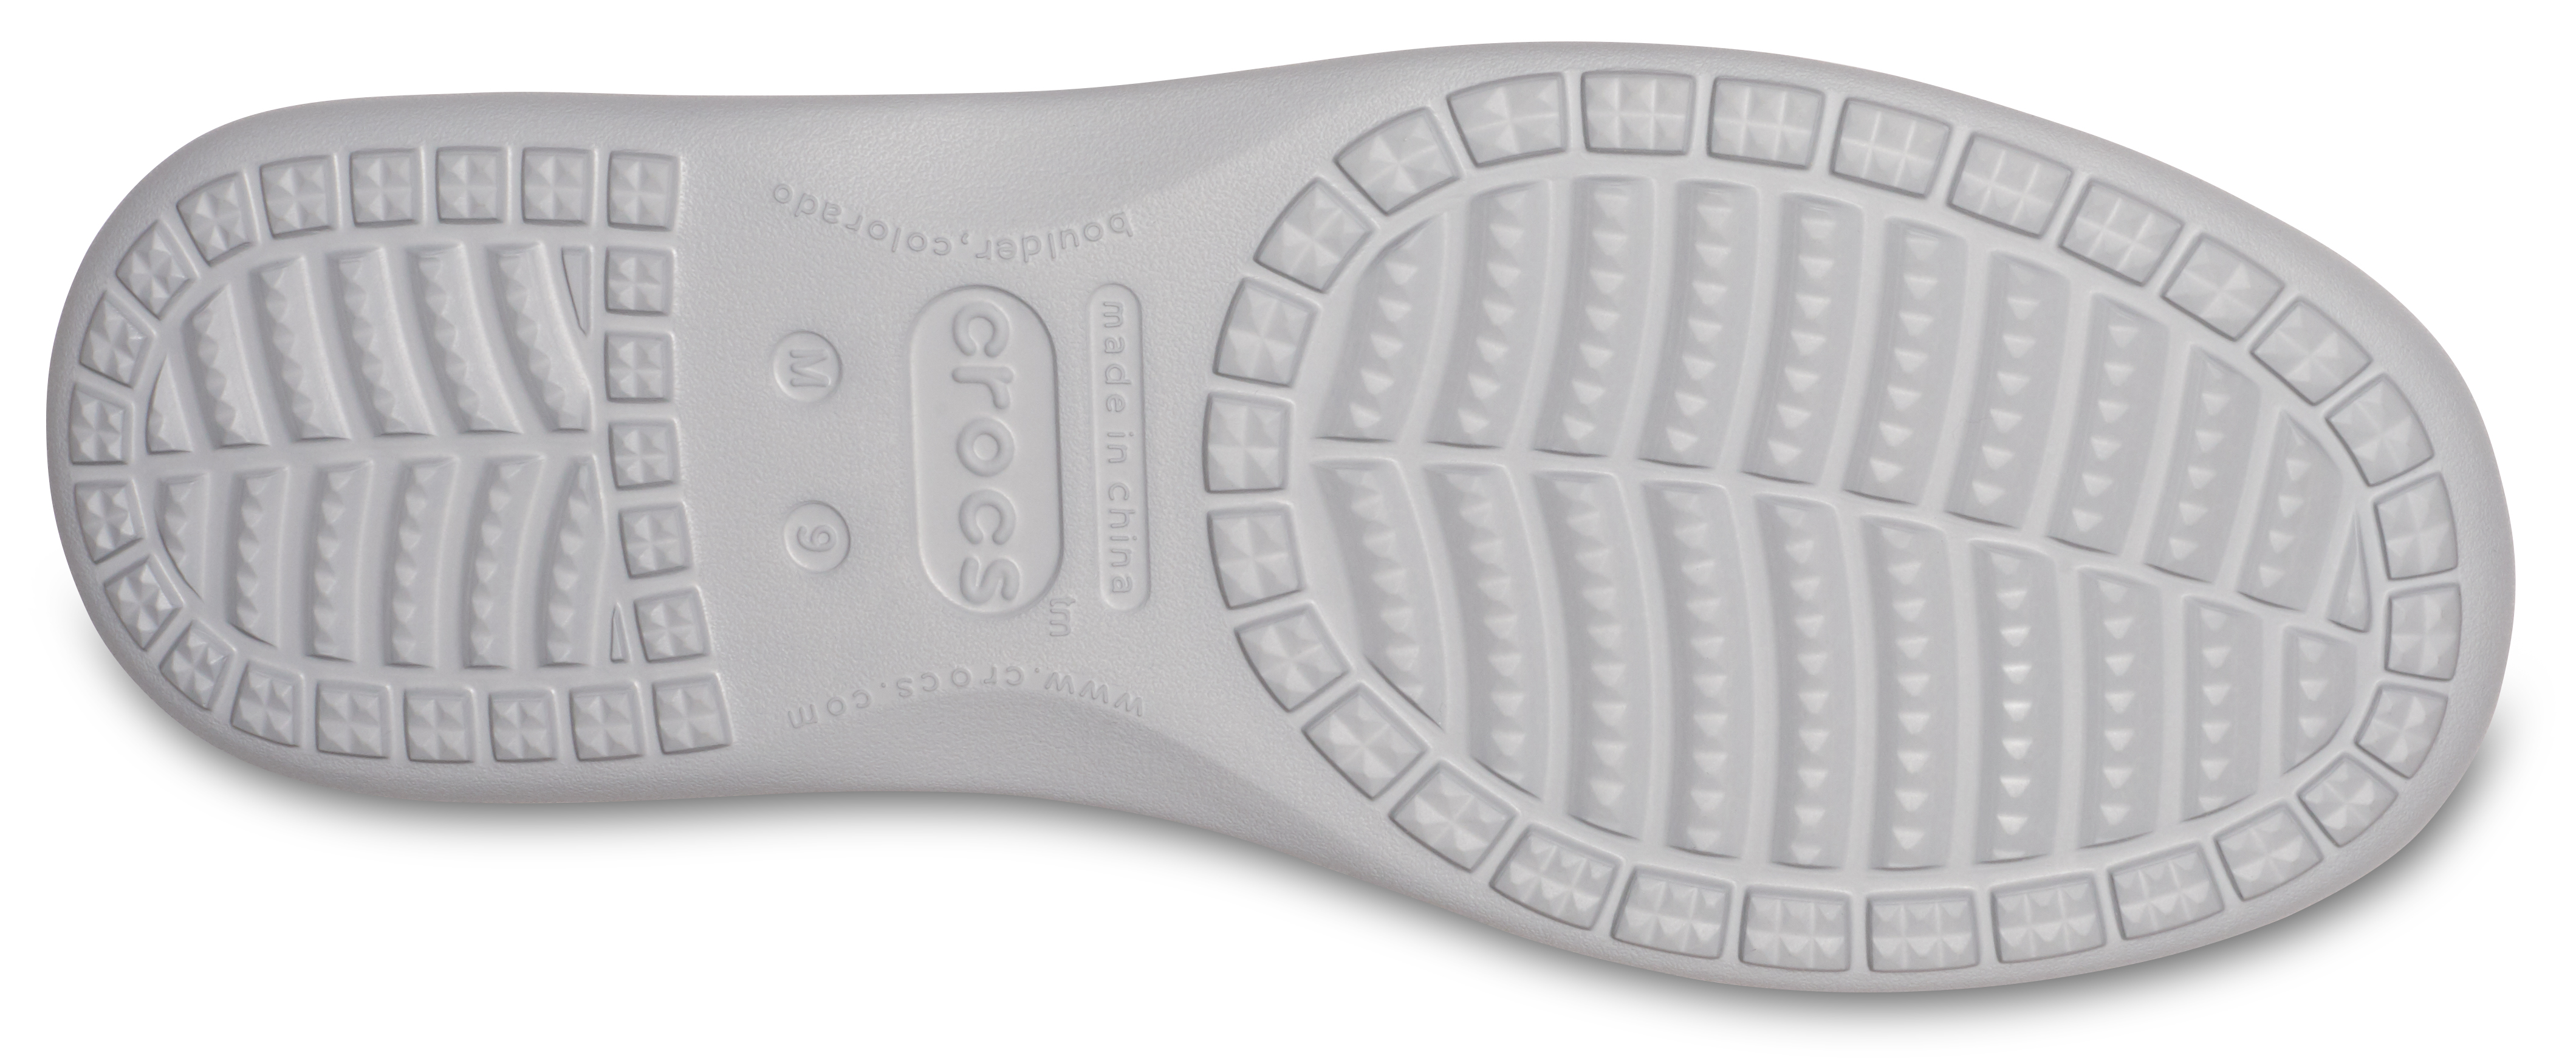 Crocs Men's Santa Cruz Slip on Loafers - image 3 of 6